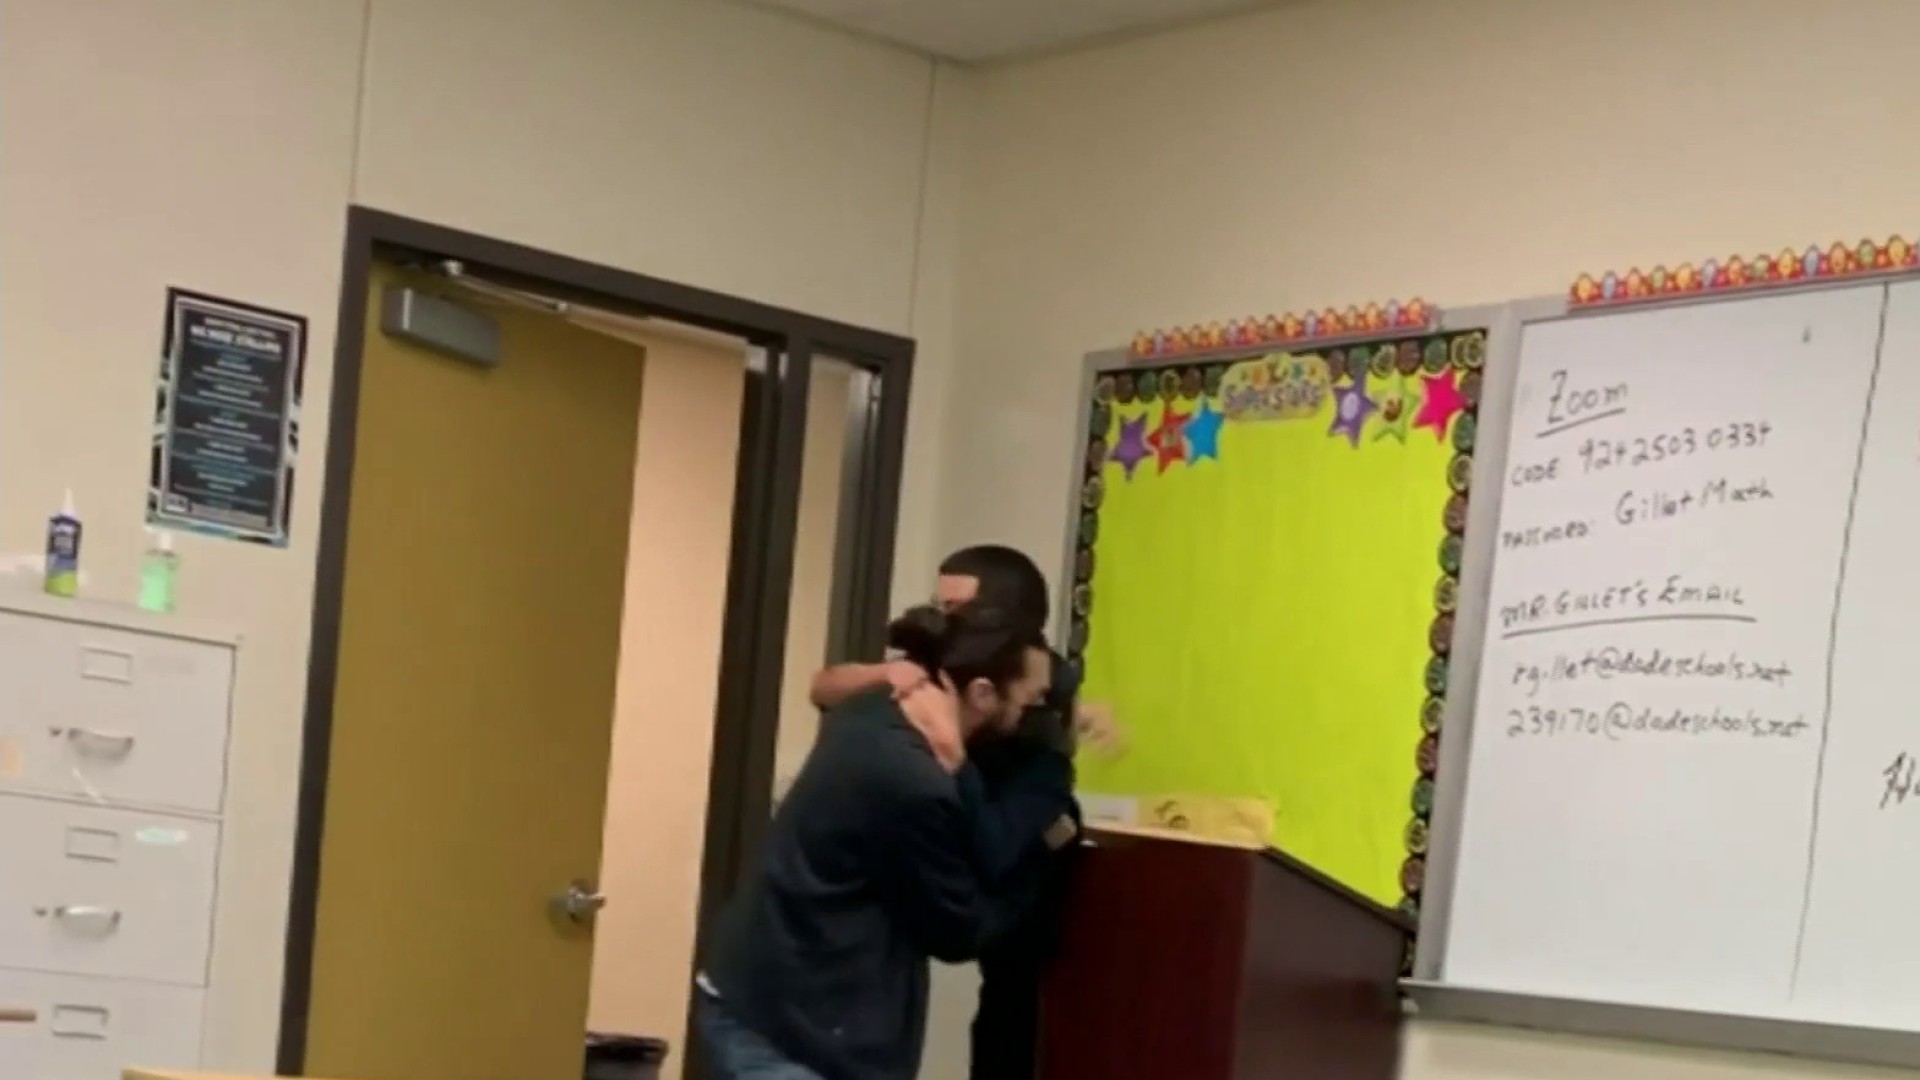 Xxx Vidoe School - Video shows Florida teacher slamming student in dispute over bathroom break